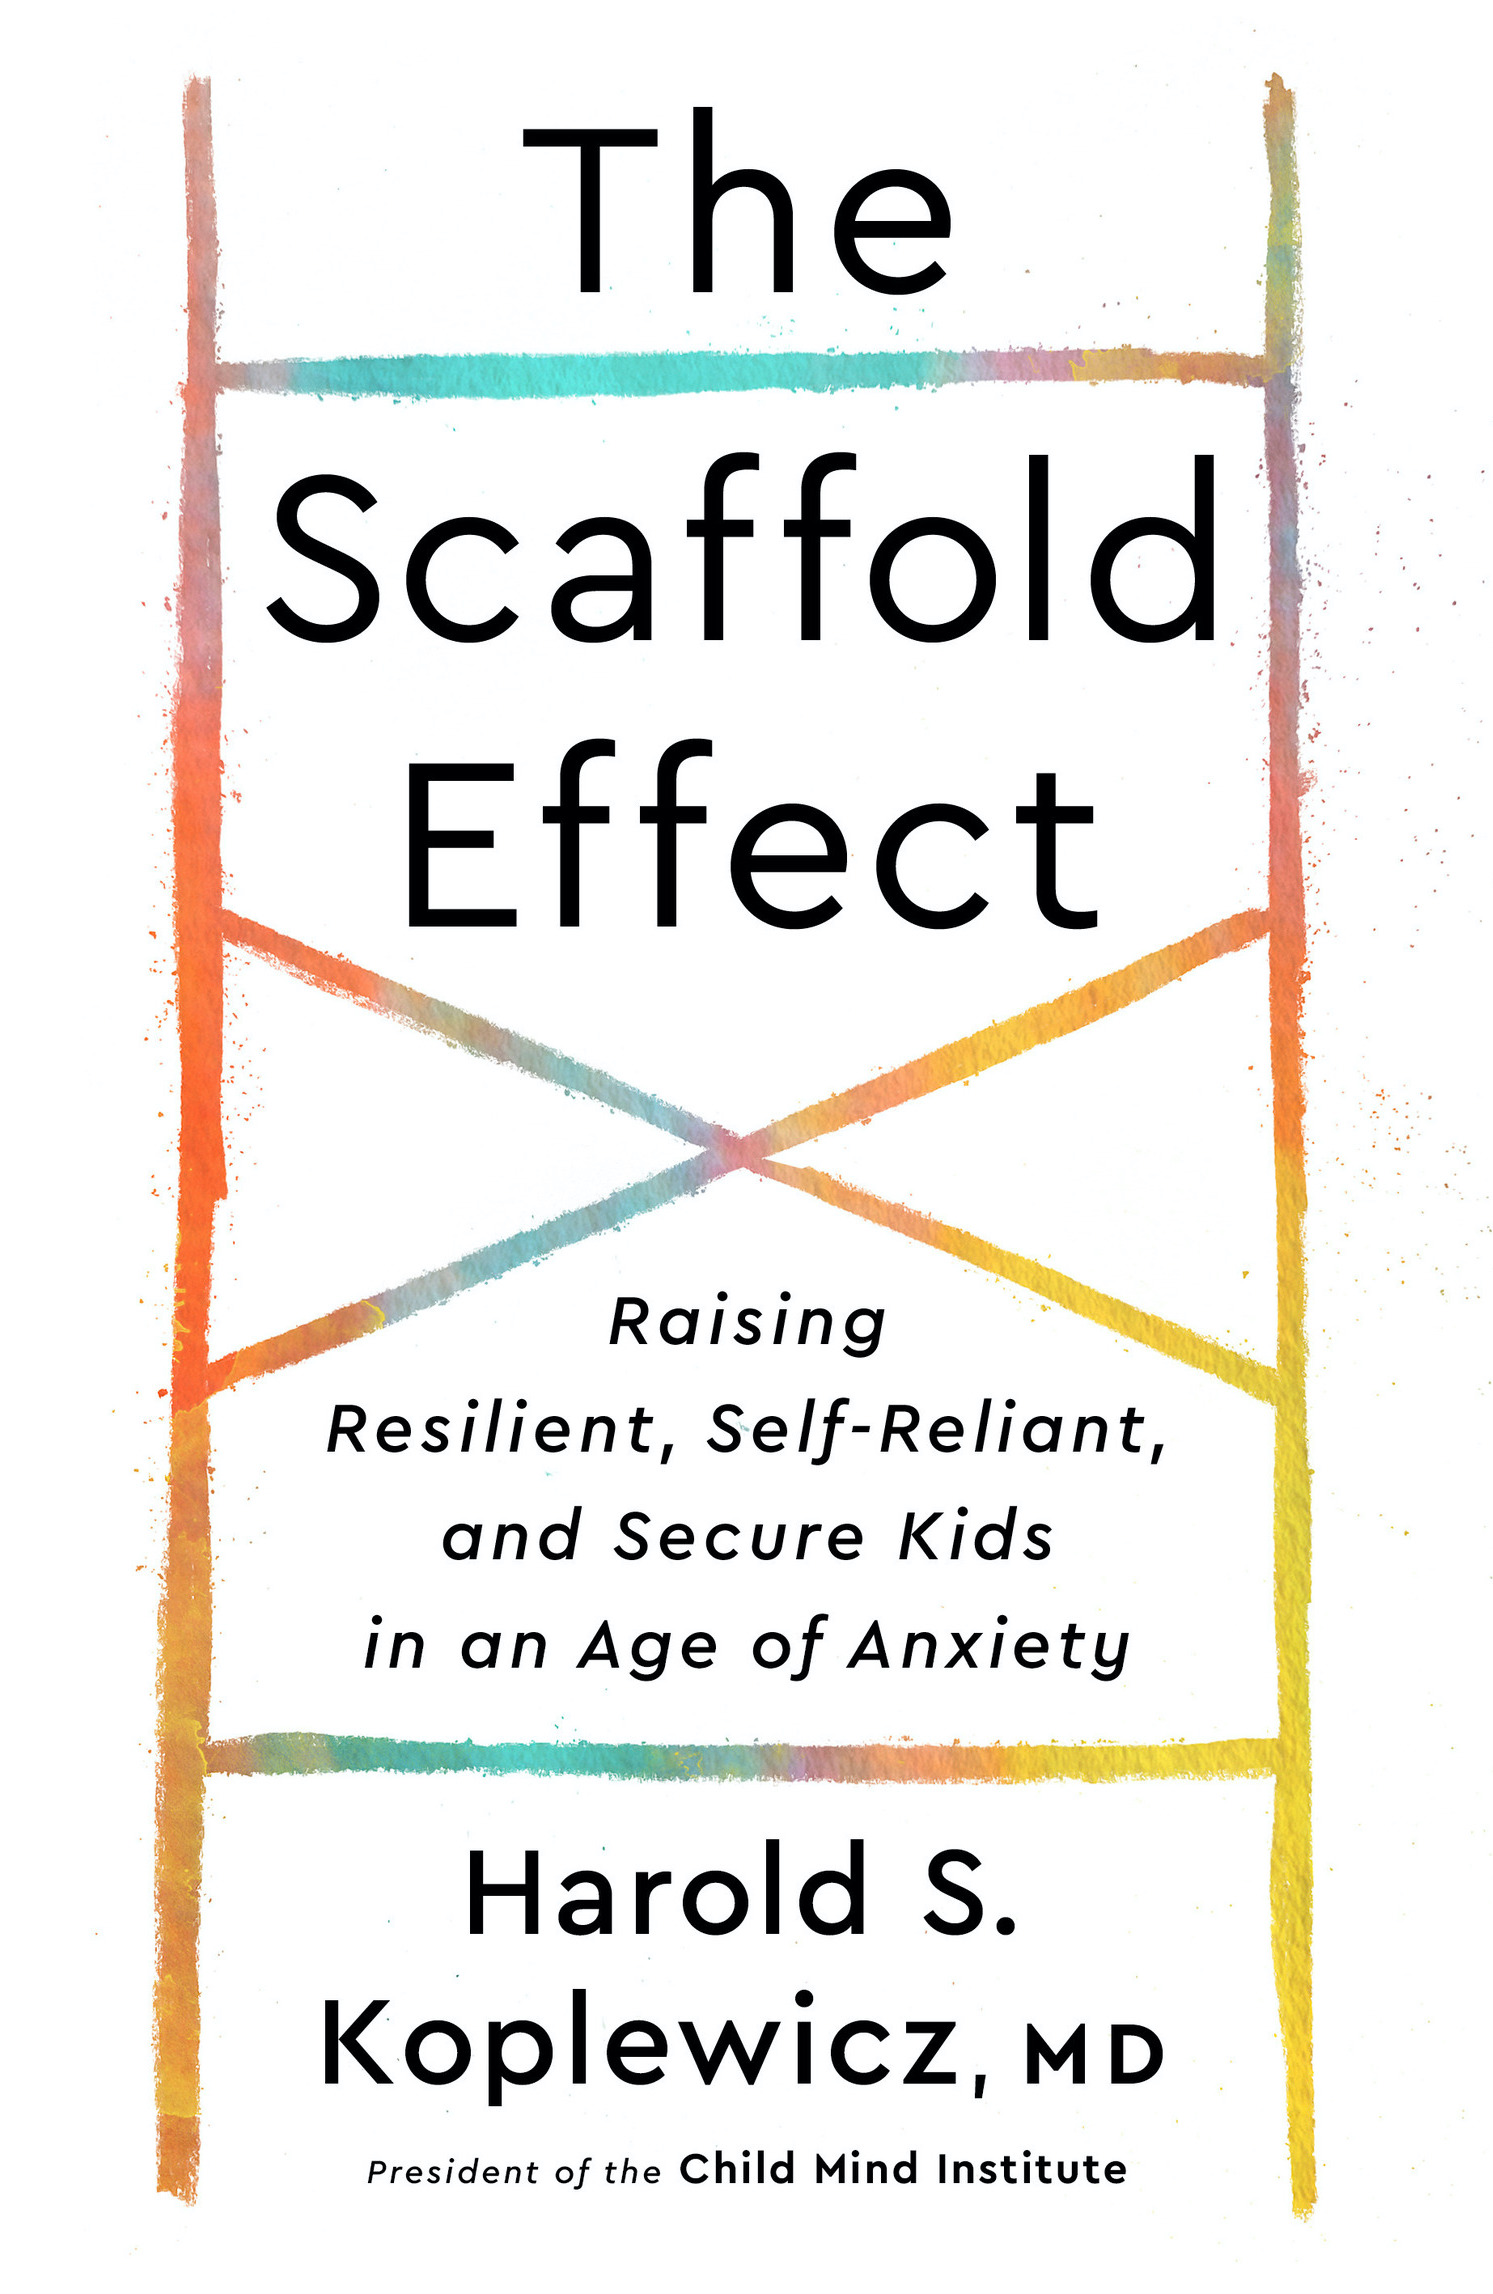 Parents Association: Author Harold Koplewicz, MD